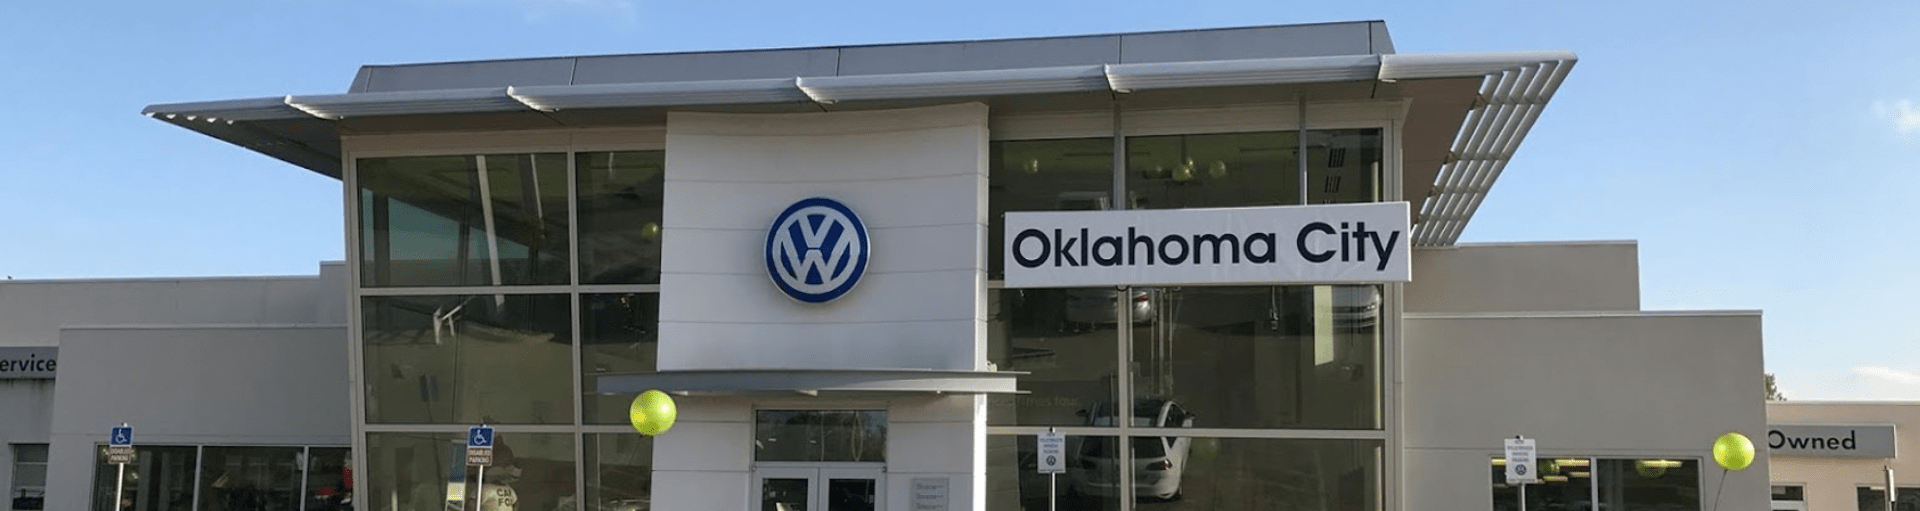 Oklahoma City Volkswagen Service & Repair